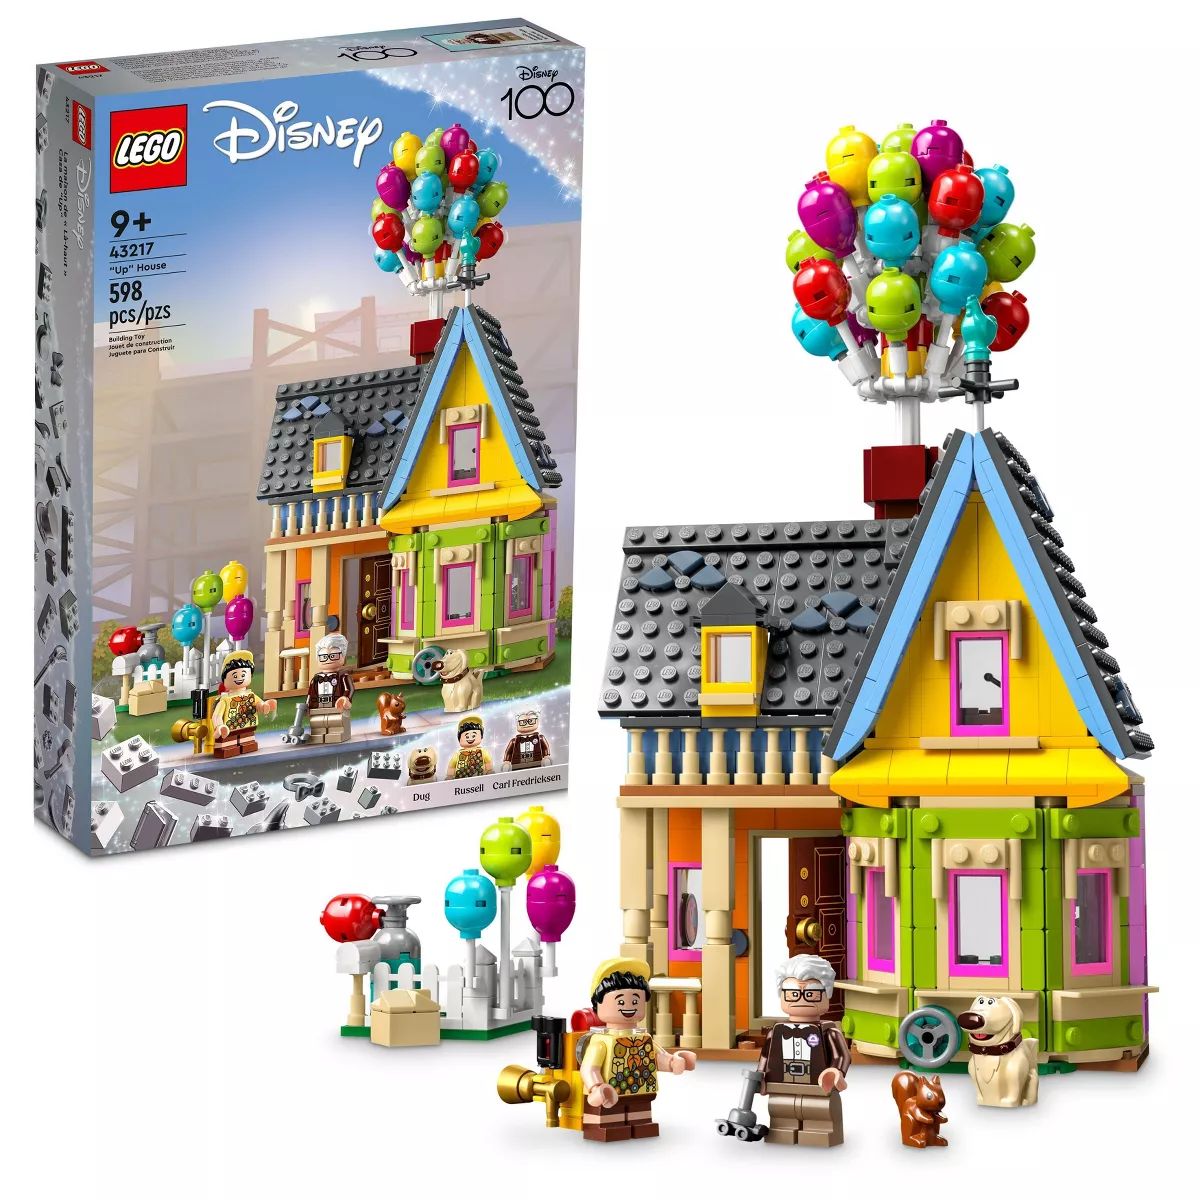 LEGO Disney and Pixar ‘Up’ House for Disney Movie Fans 43217 | Target